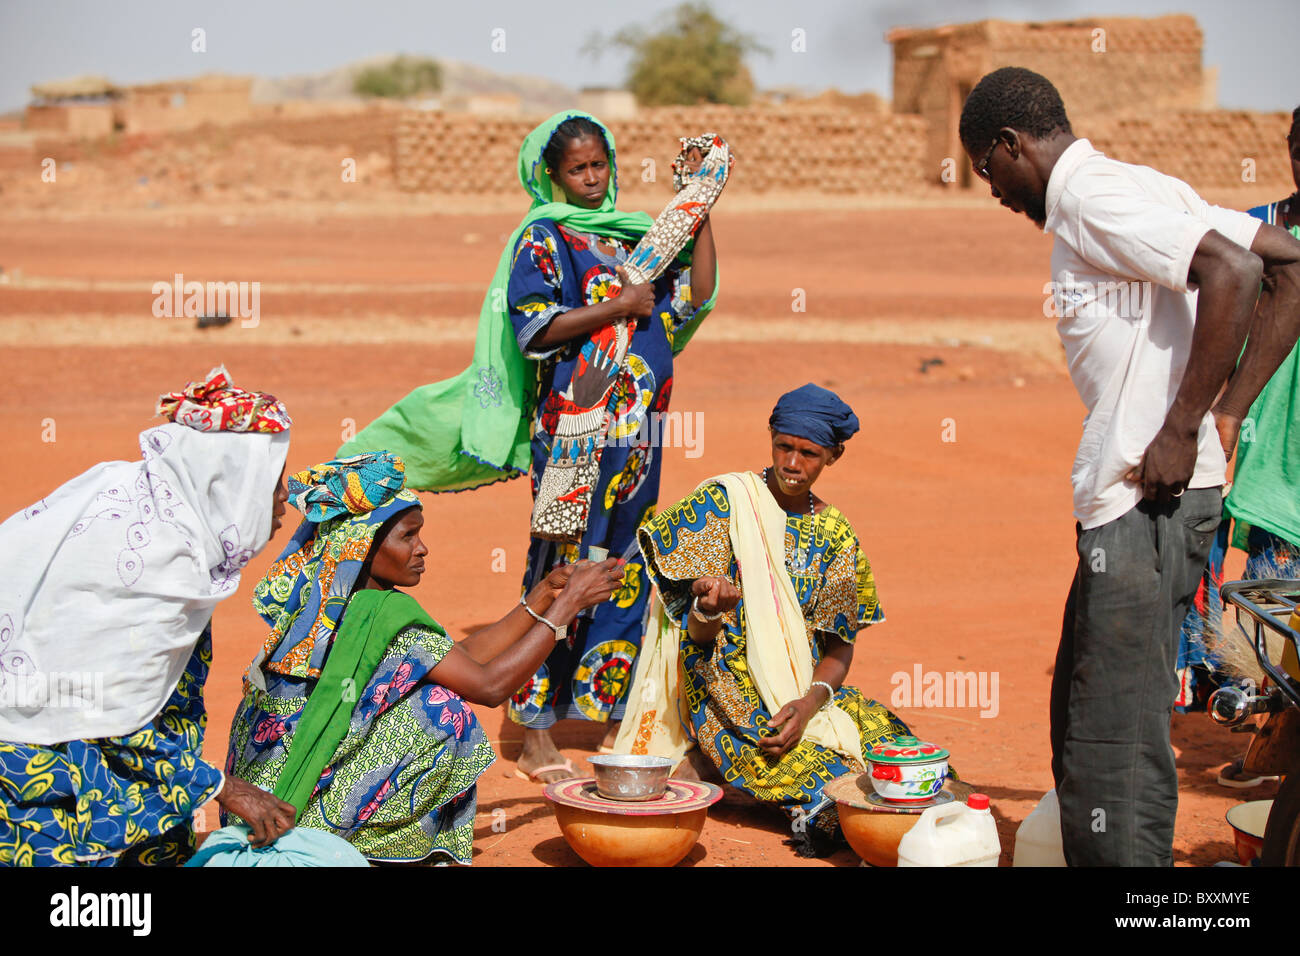 Here, women arrive in Djibo, Burkina Faso, carrying fresh milk for sale in calabashes. Stock Photo